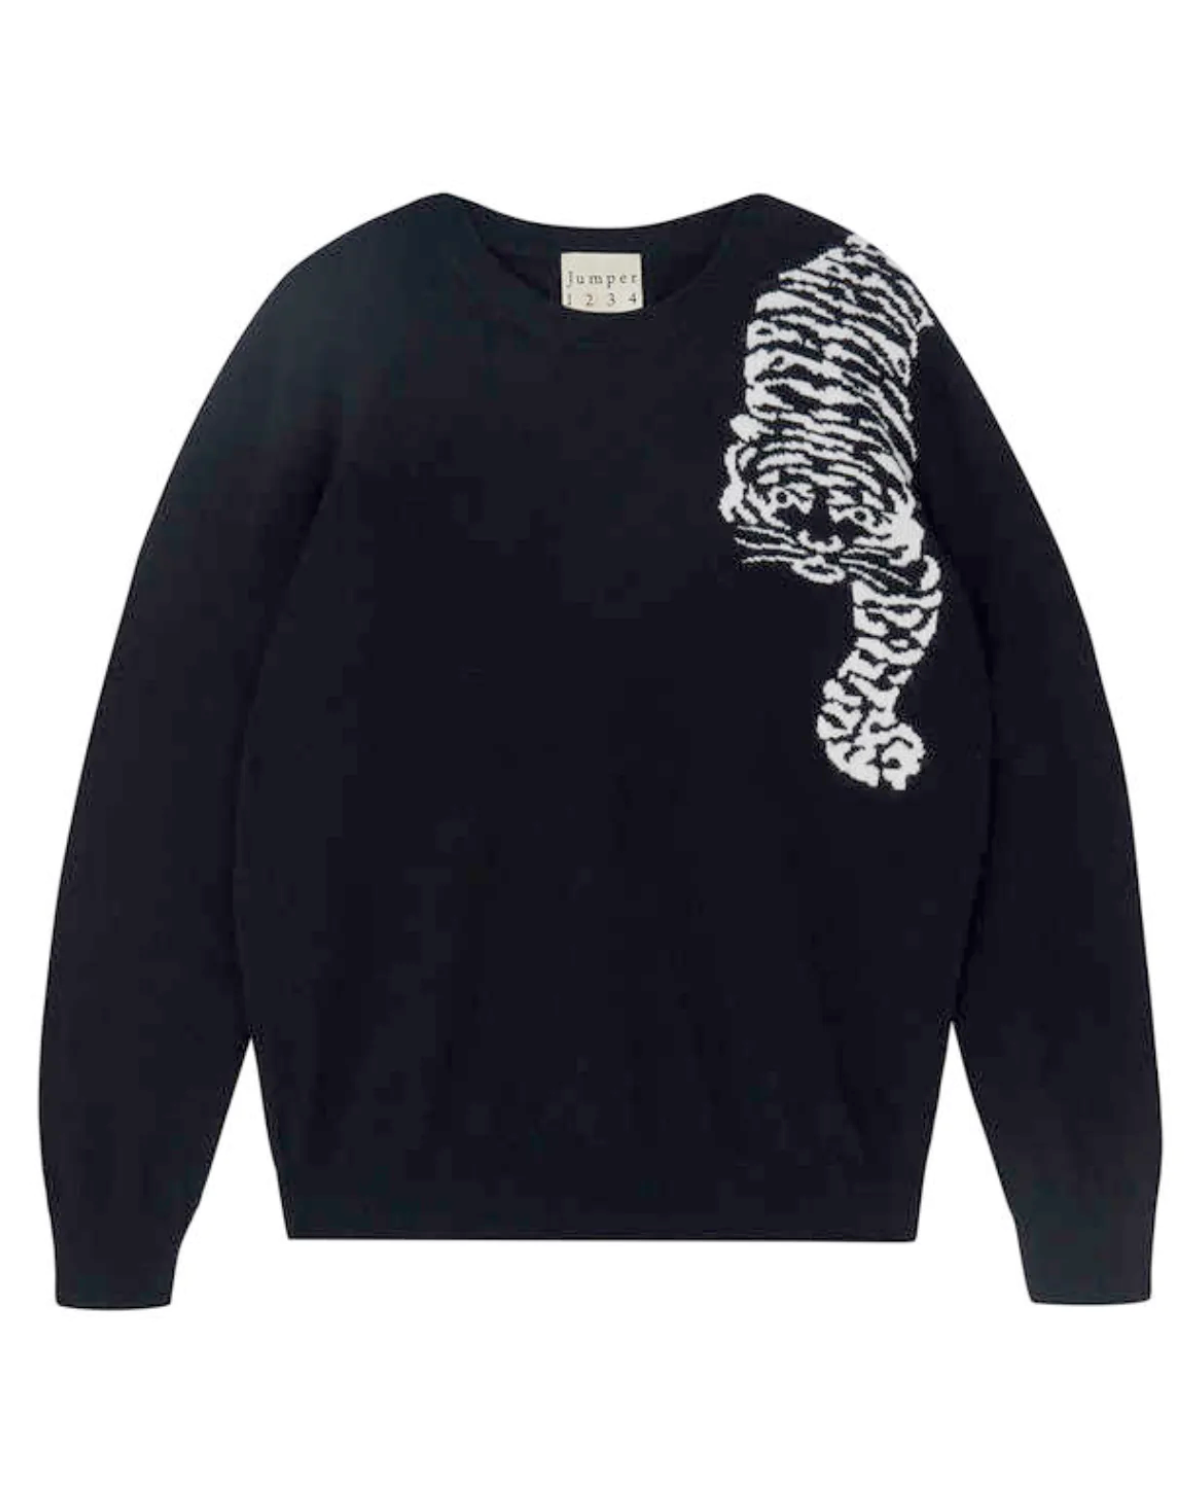 Creeping Tiger Crewneck Sweater (Black/Cream)